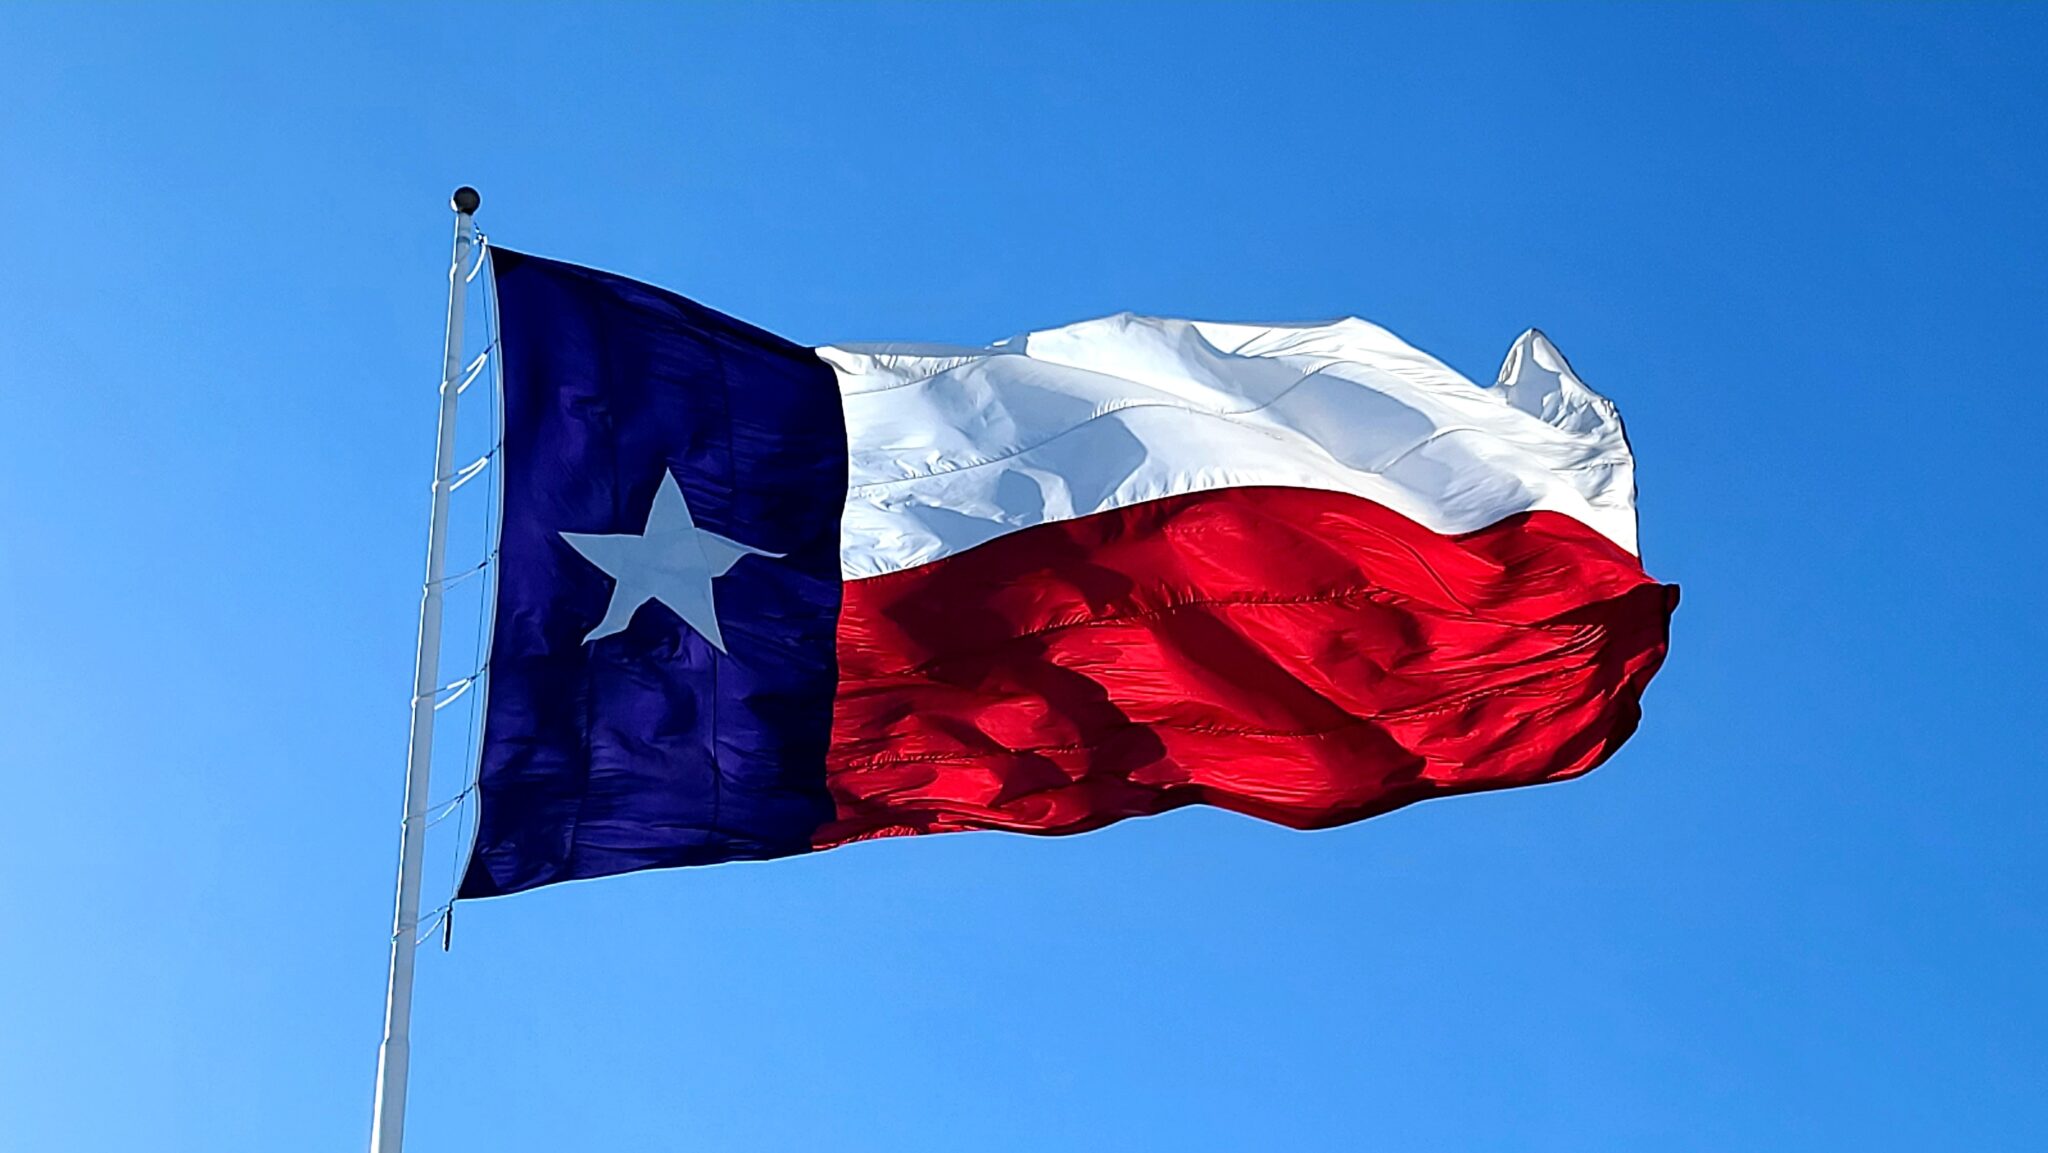 Texas flag under a bright blue sky.